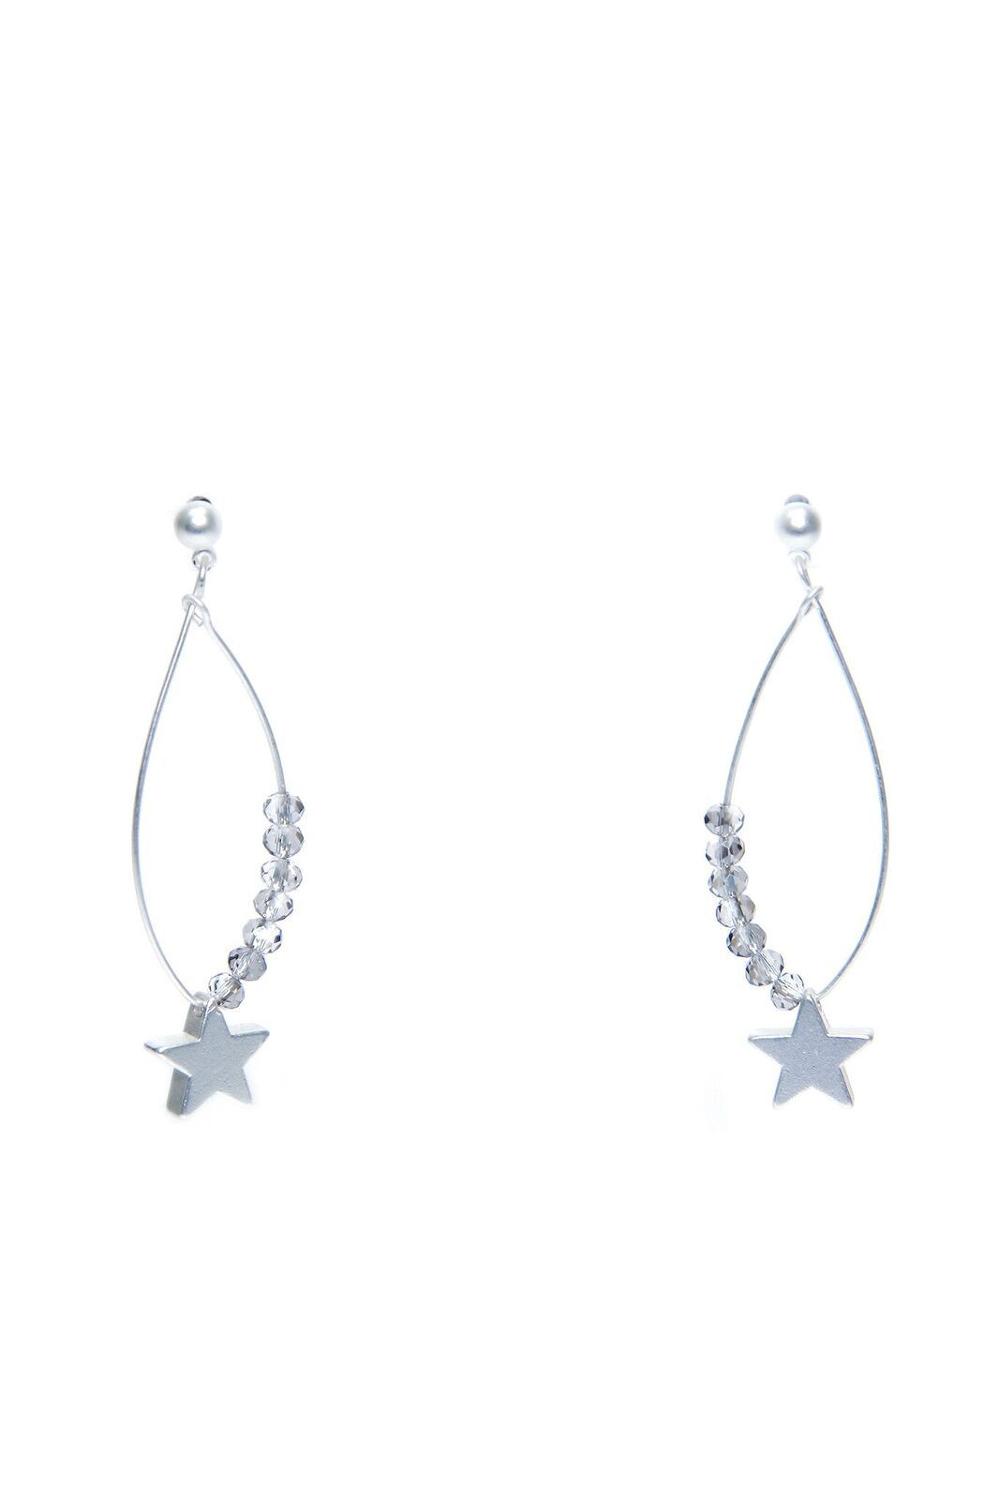 Envy - Silver Star and gems earrings